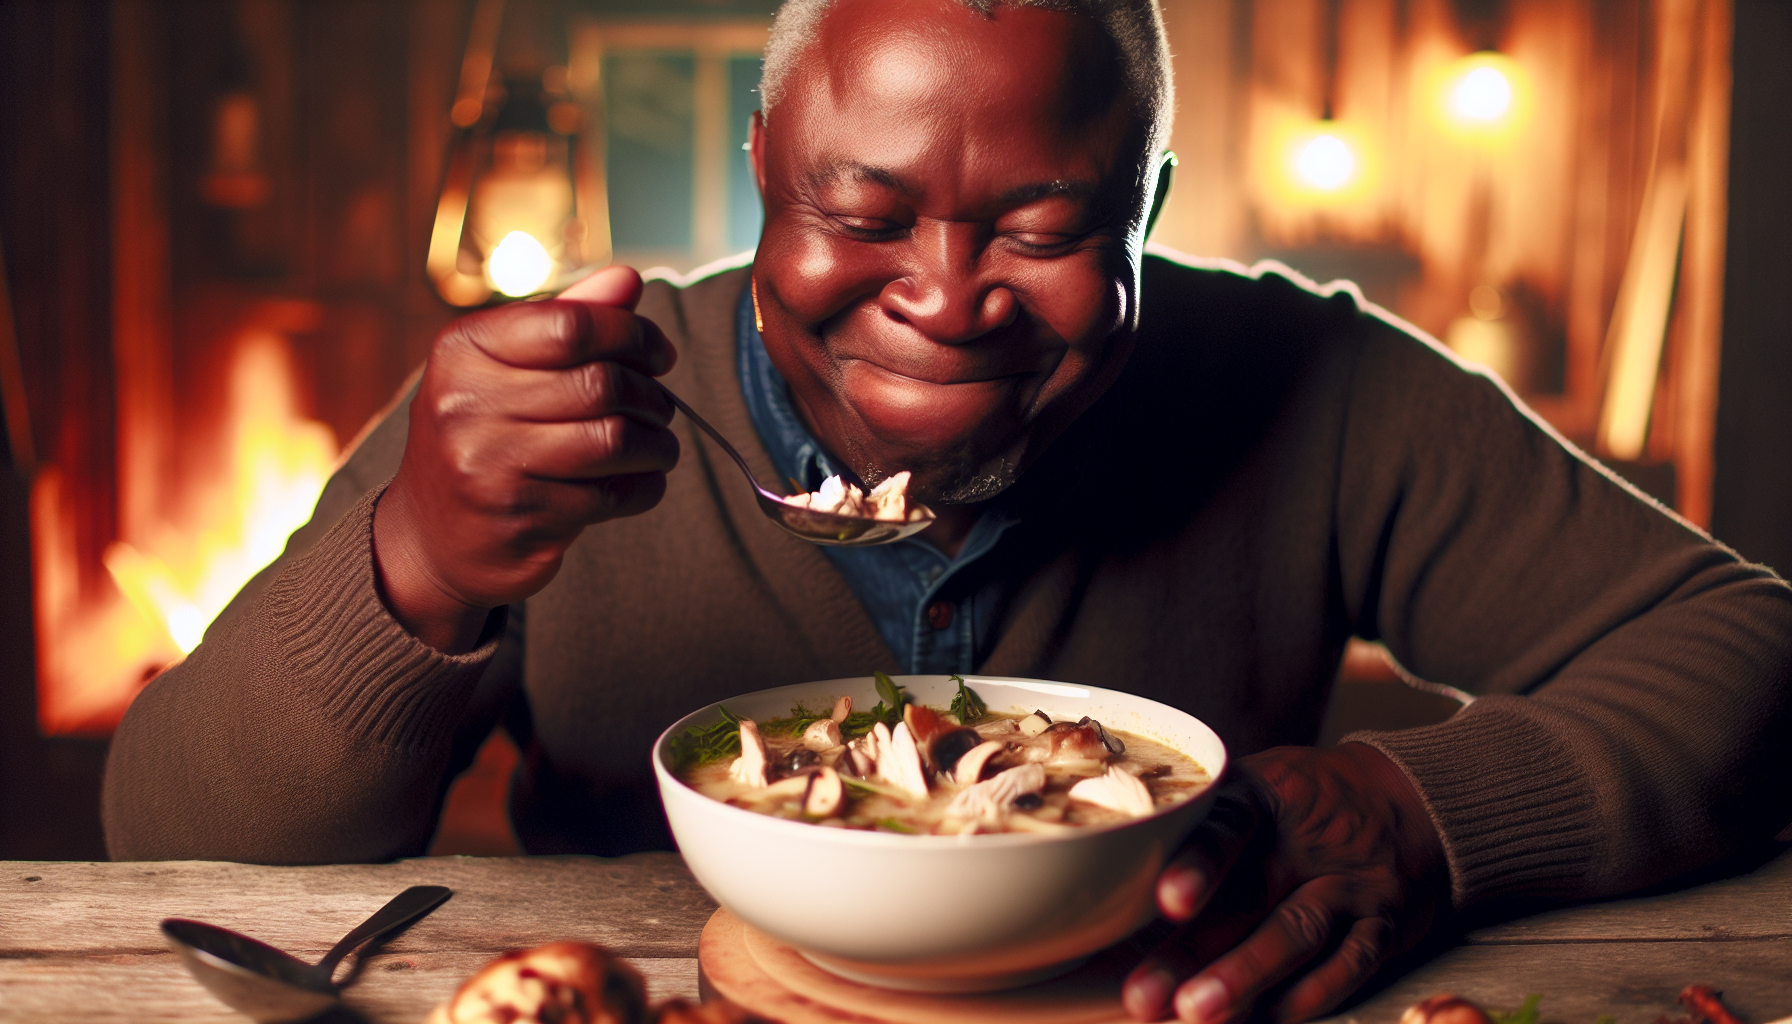 A person enjoying a bowl of chicken mushroom soup